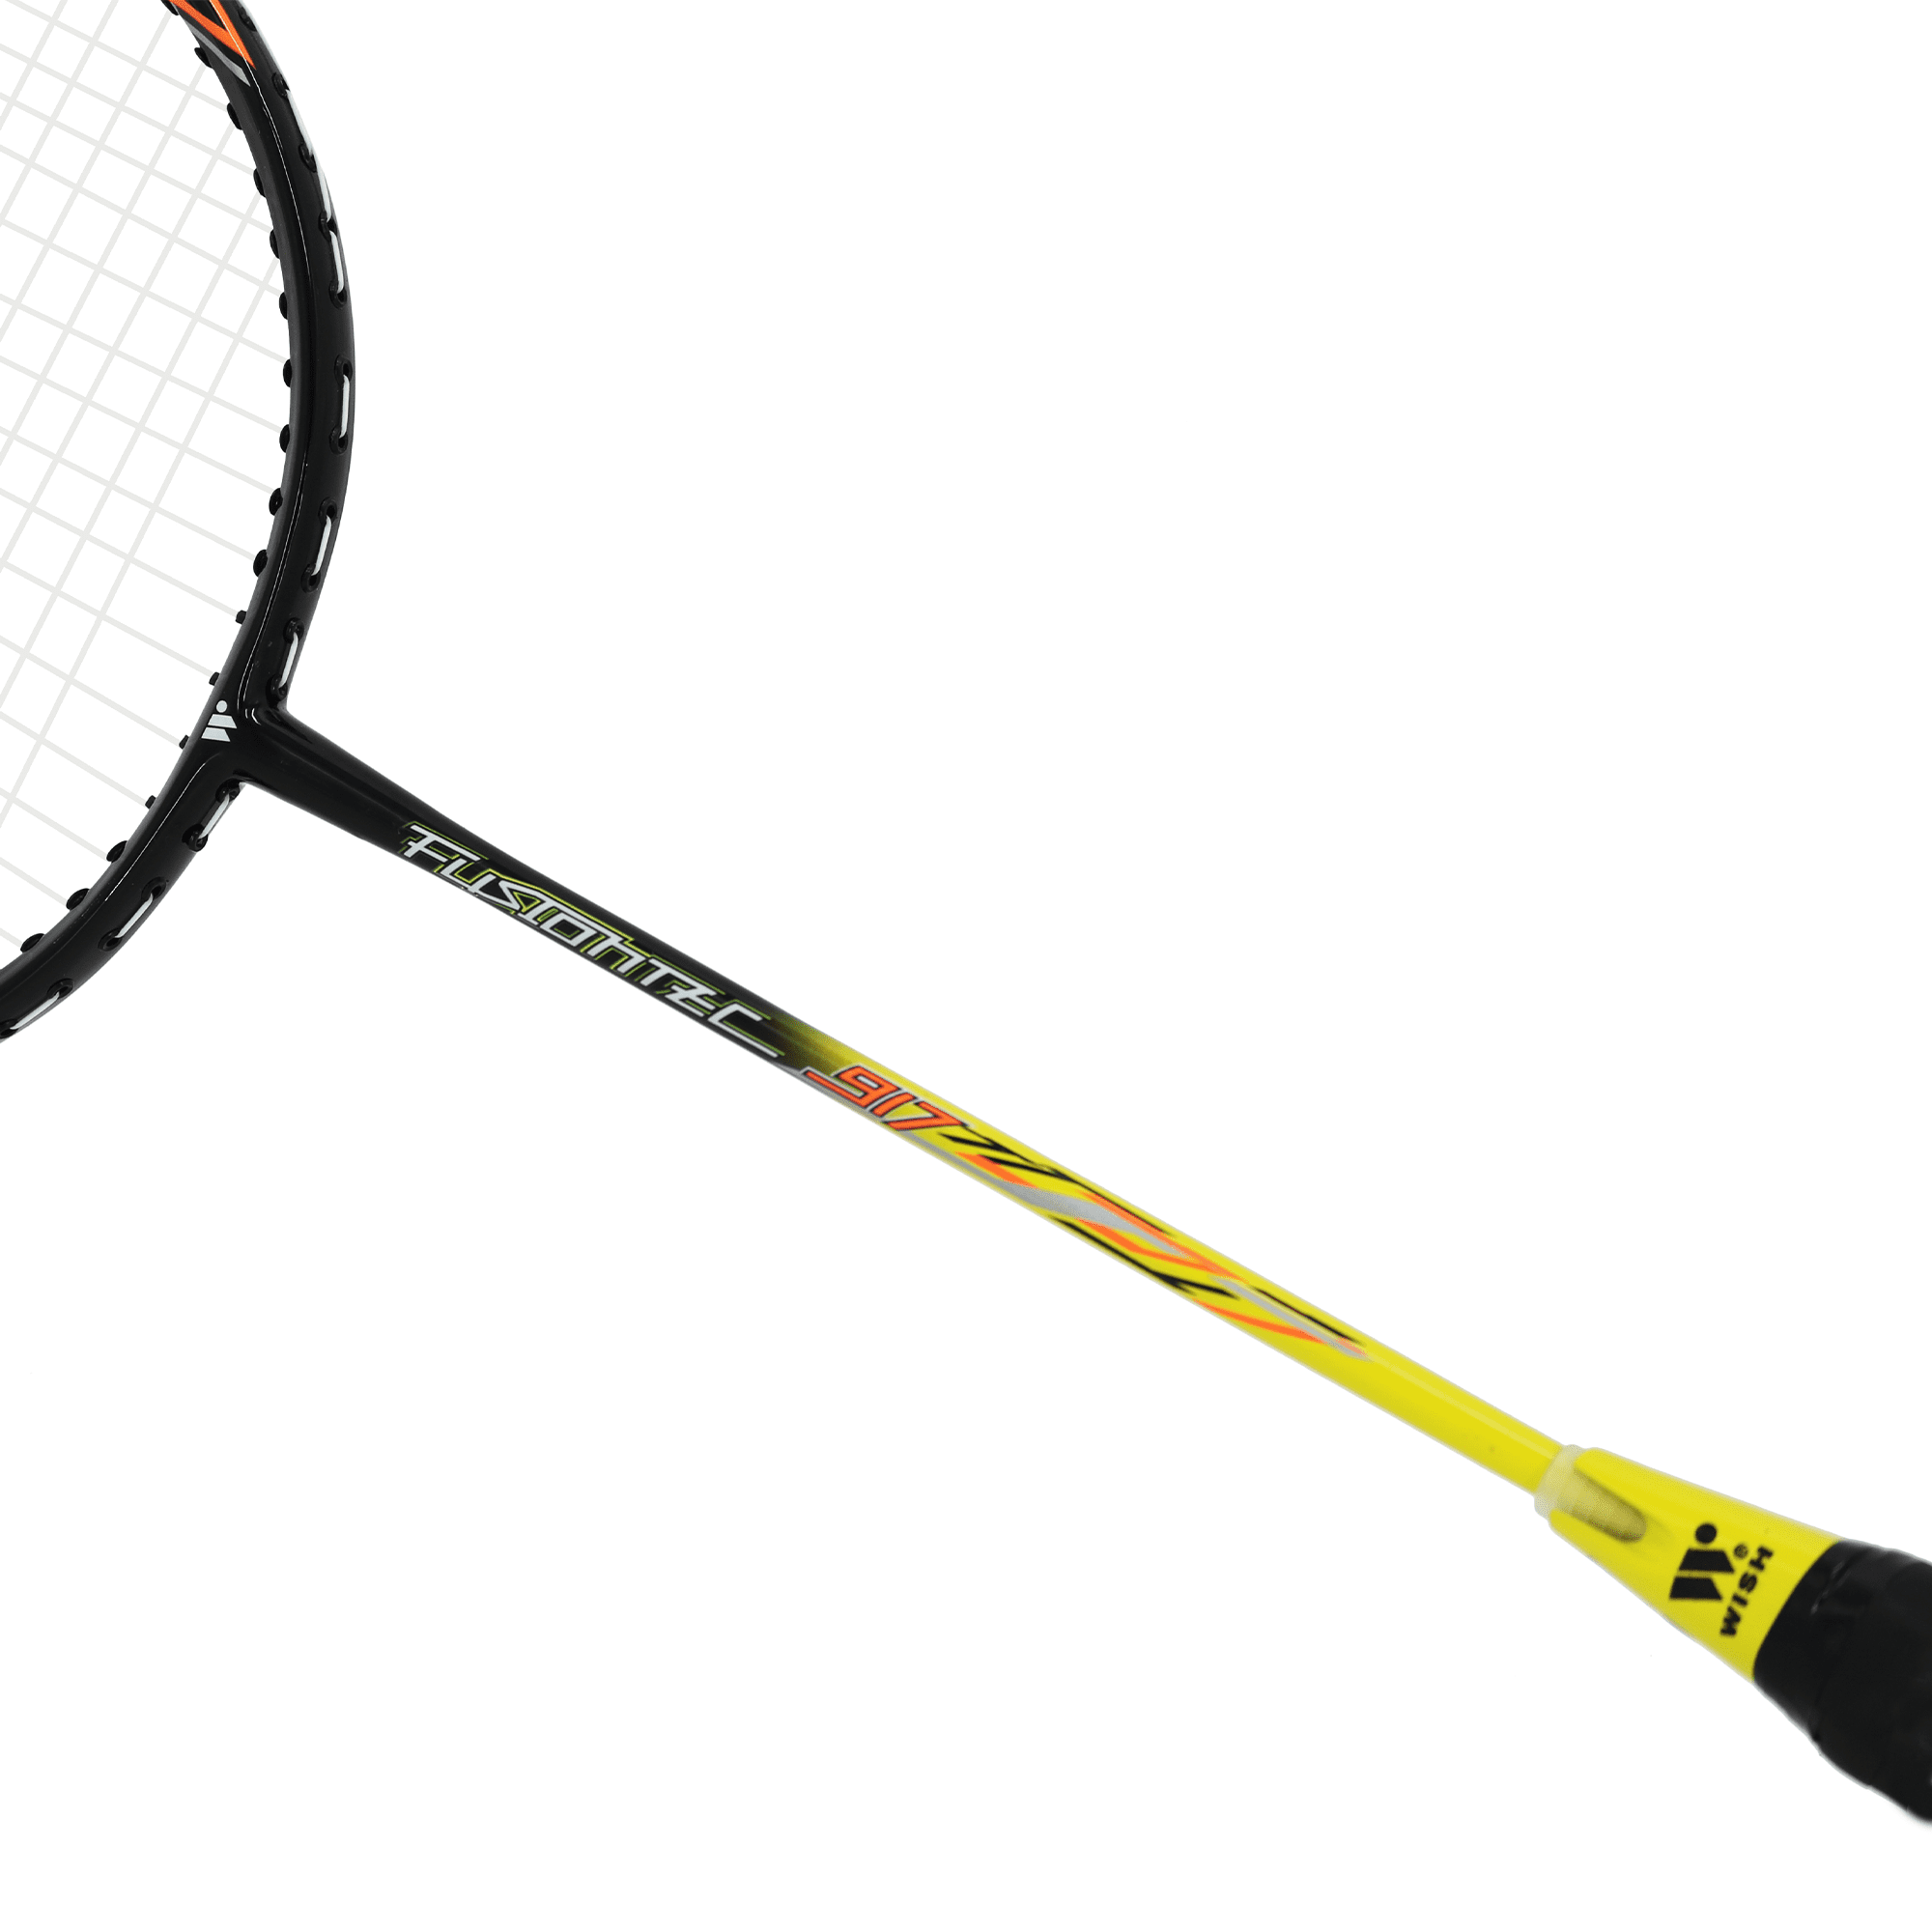 FusionTec 917 Badminton Racket Black Red